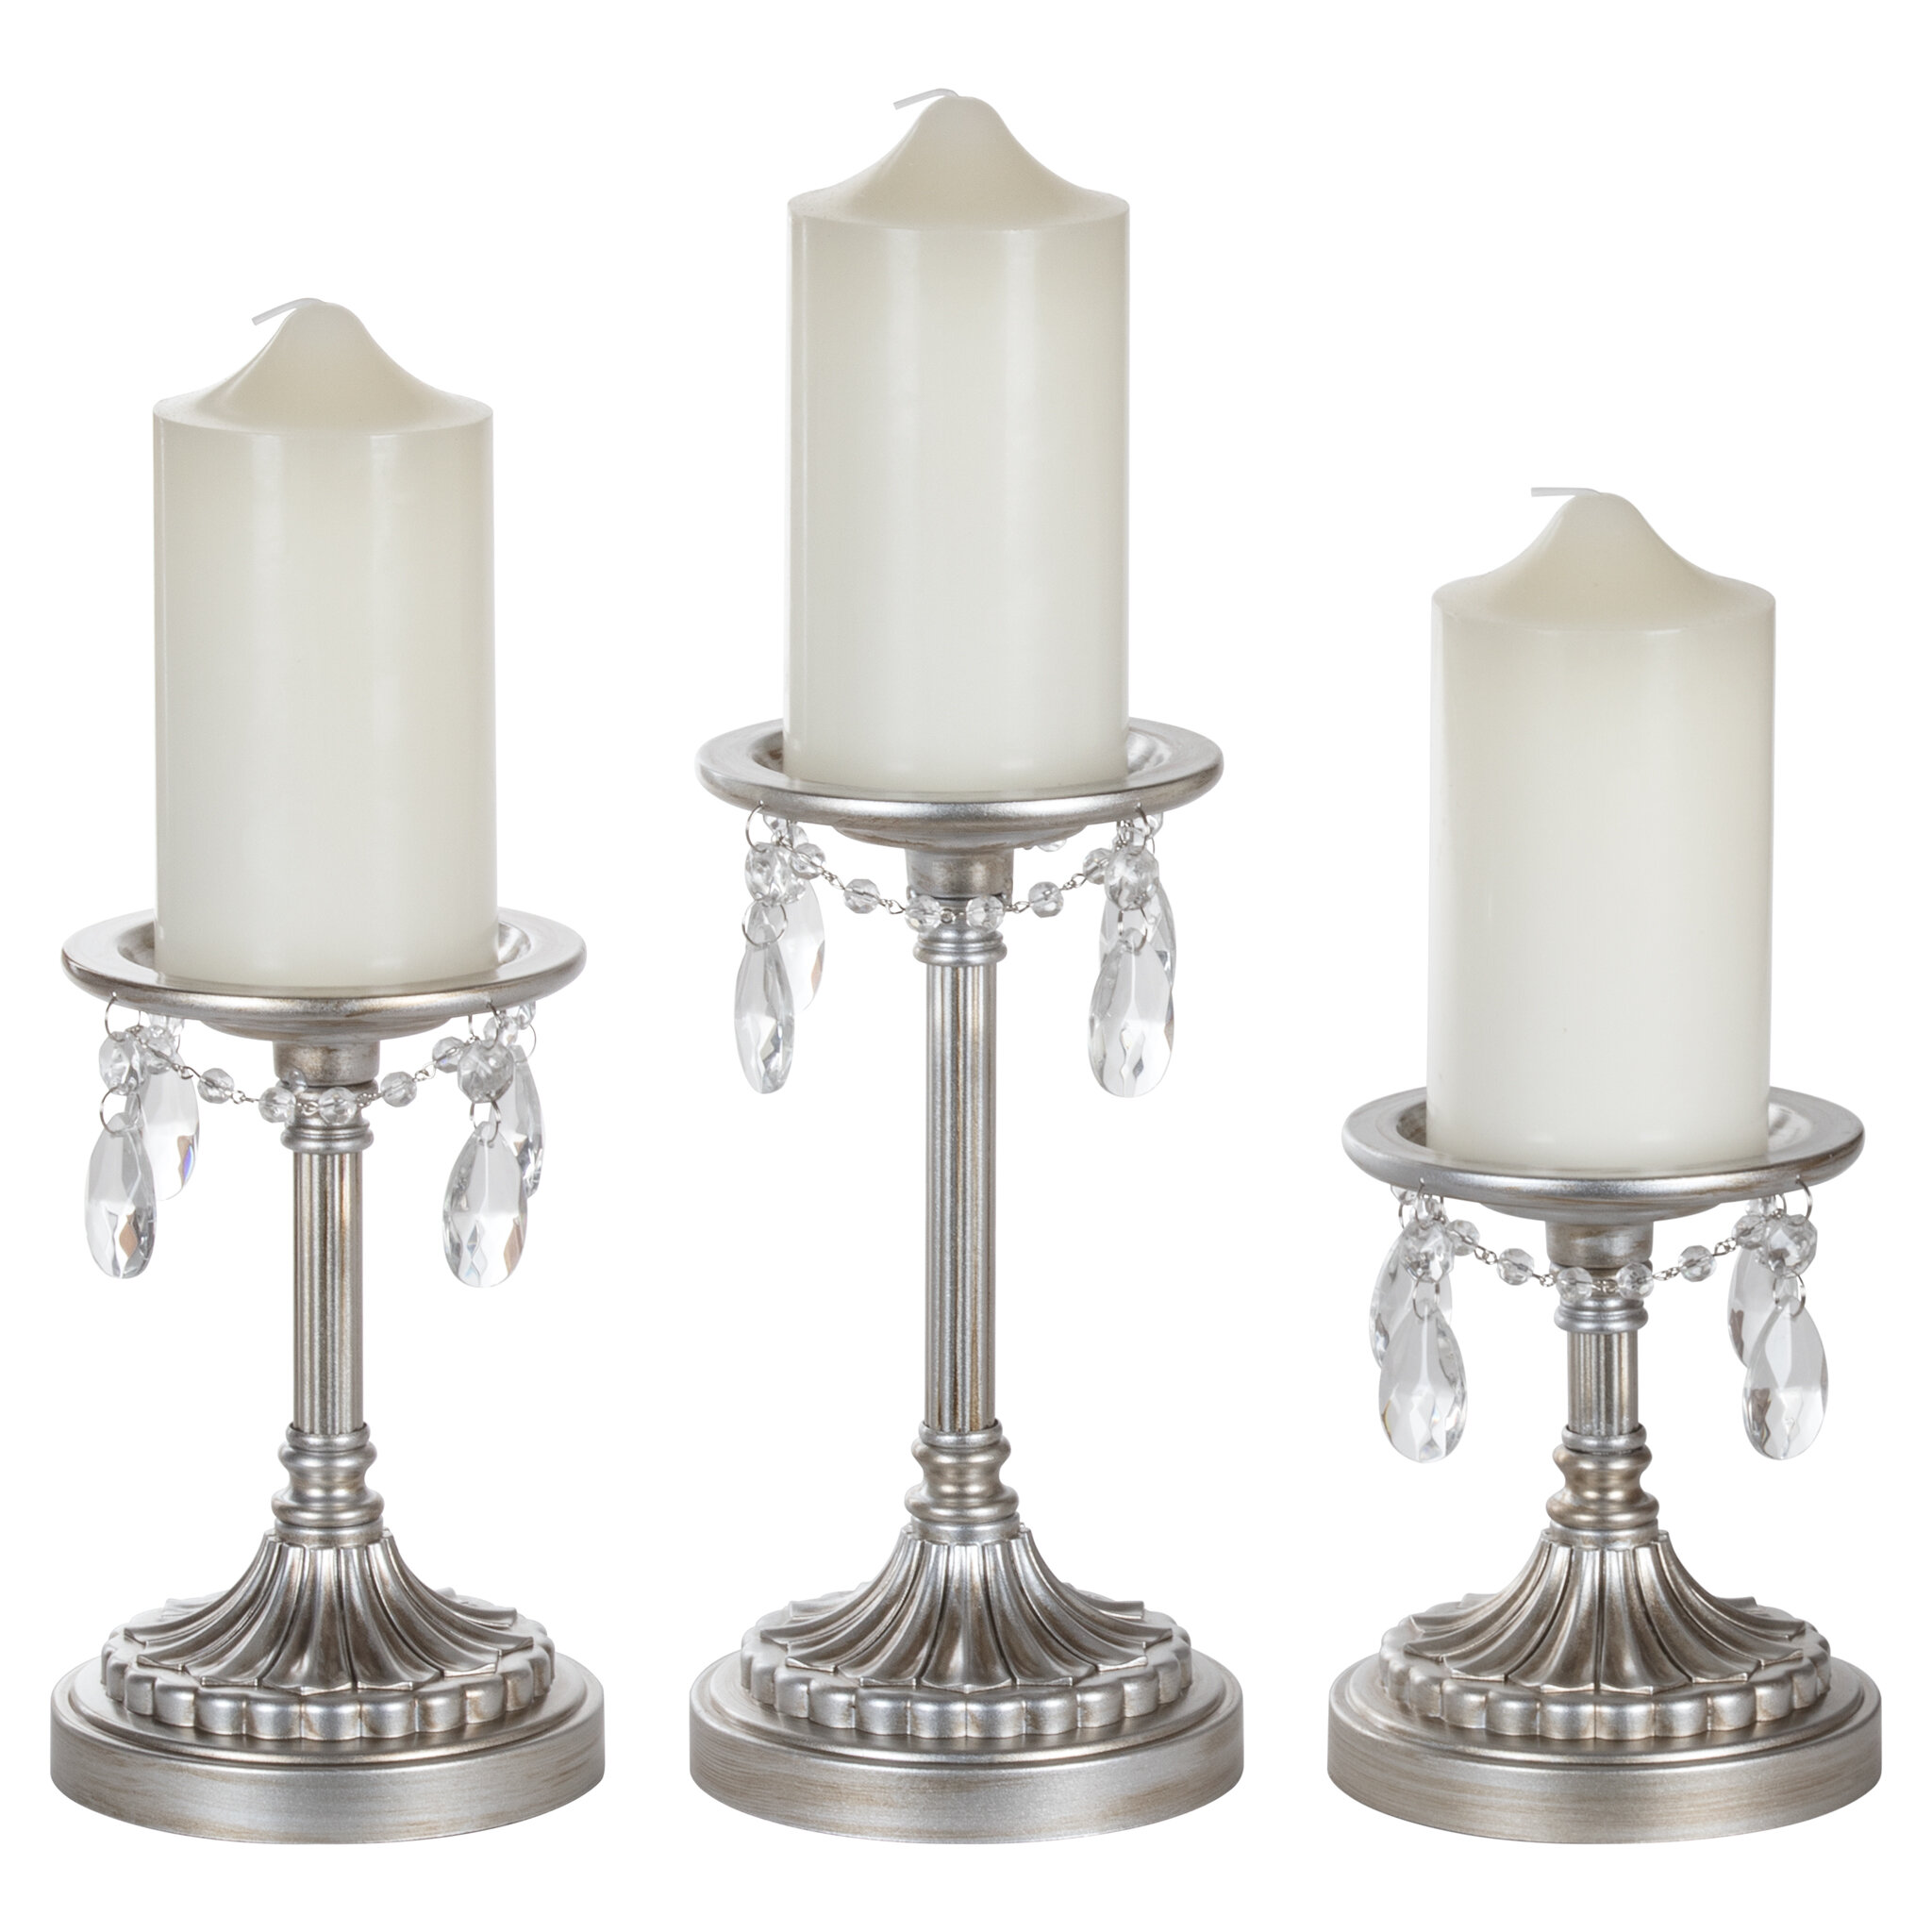 Home Garden 2 White Crystal Clear Prism Hurricane Pedestal Pillar Chandelier Candle Holder Candles